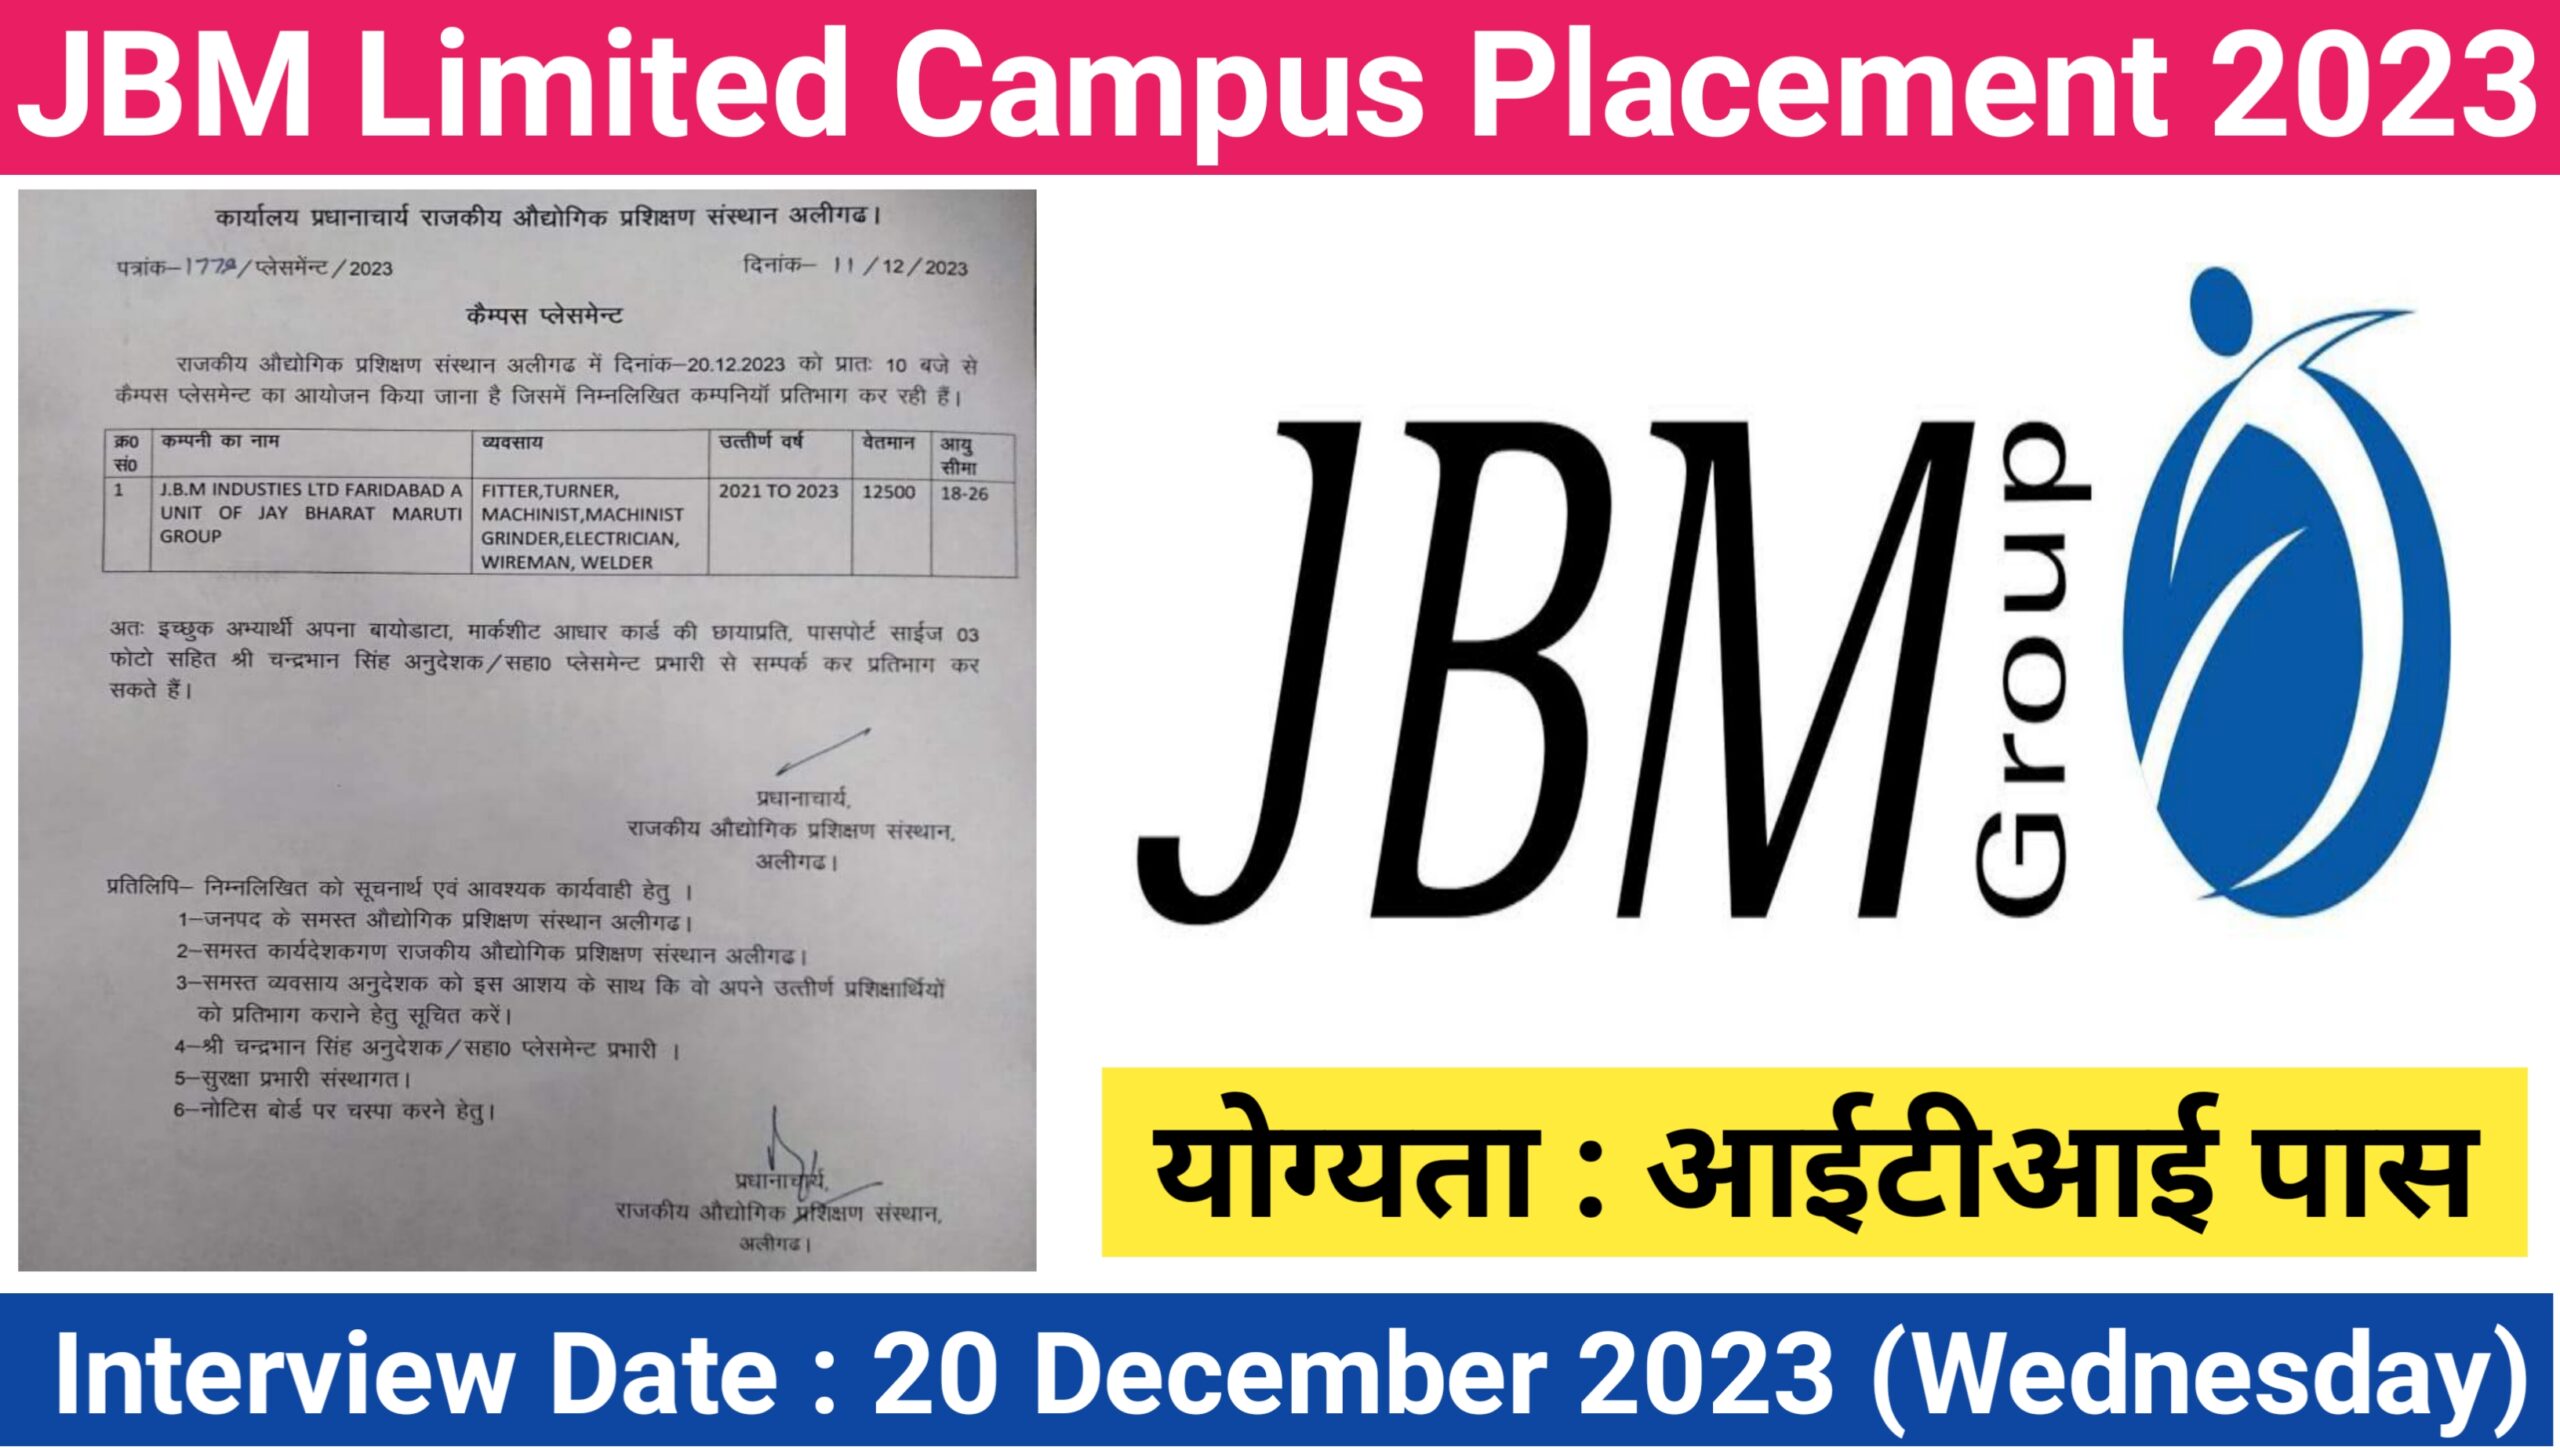 JBM Limited Campus Placement 2023